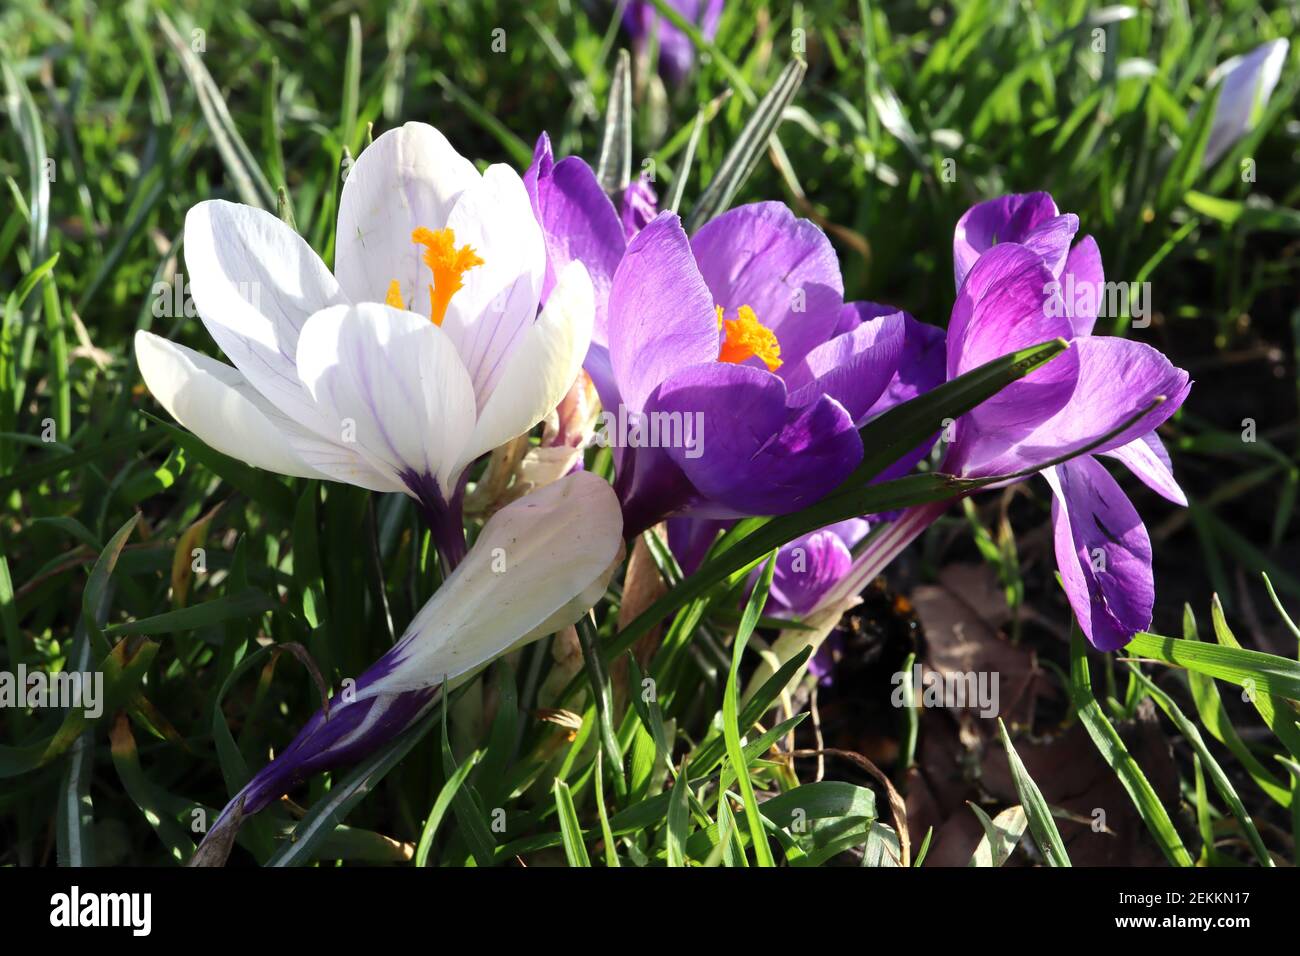 Crocus vernus ‘Jeanne DARC’ e Crocus vernus ‘Flower Record’ bianco Crocus e viola intenso Crocus, febbraio, Inghilterra, Regno Unito Foto Stock